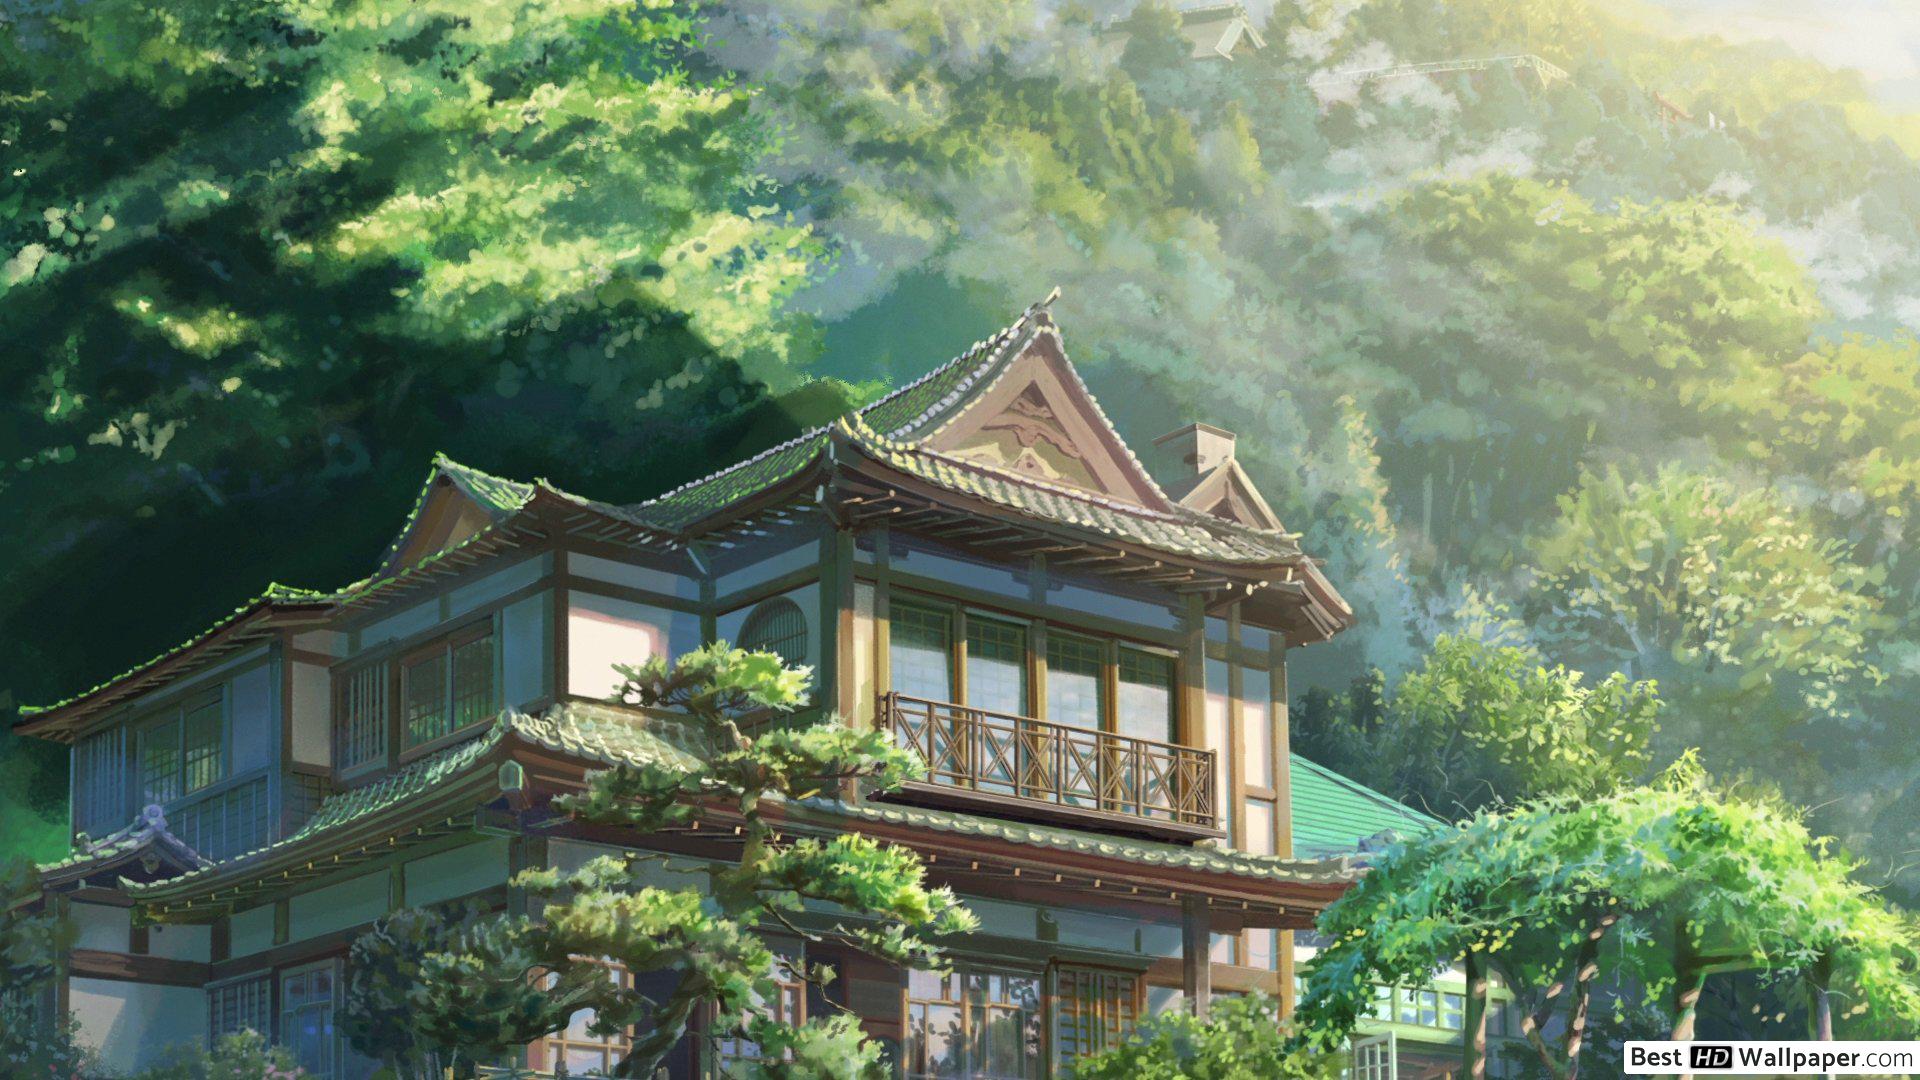 fond d'écran kimi no na wa,architecture chinoise,la nature,architecture,architecture japonaise,propriété